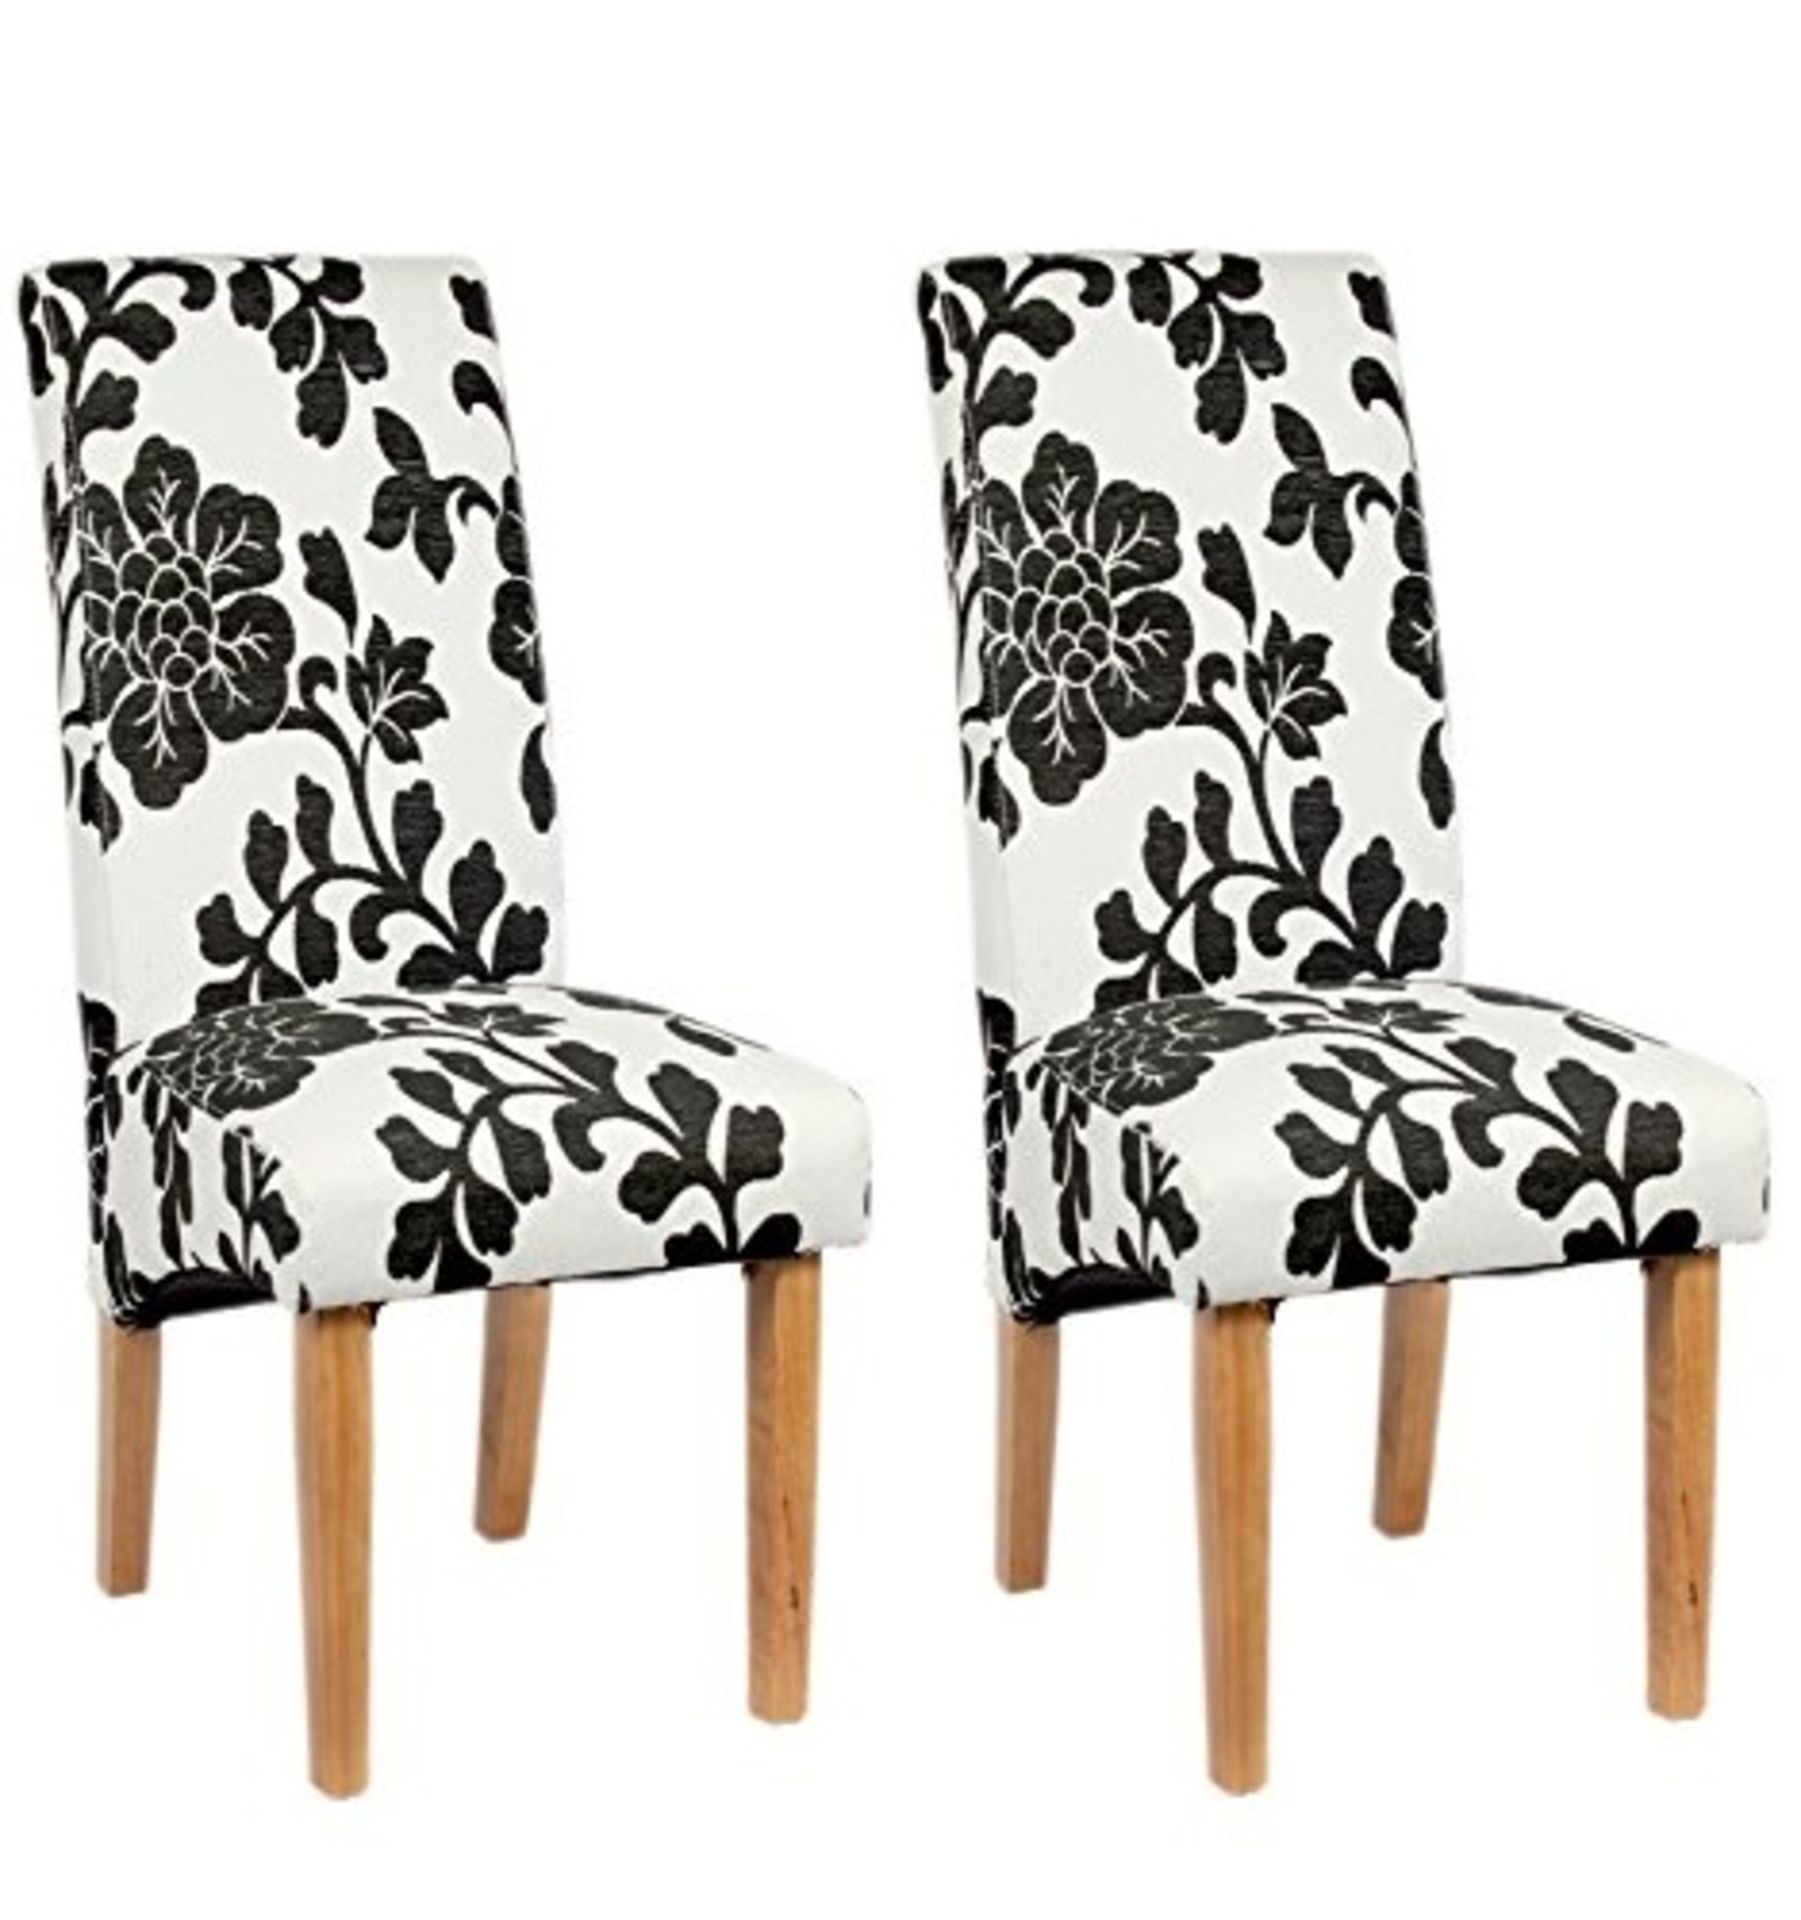 V *TRADE QTY* Brand New Black Flower Fabric Dining Chair H105 x W 45 x D64 cms X 3 YOUR BID PRICE TO